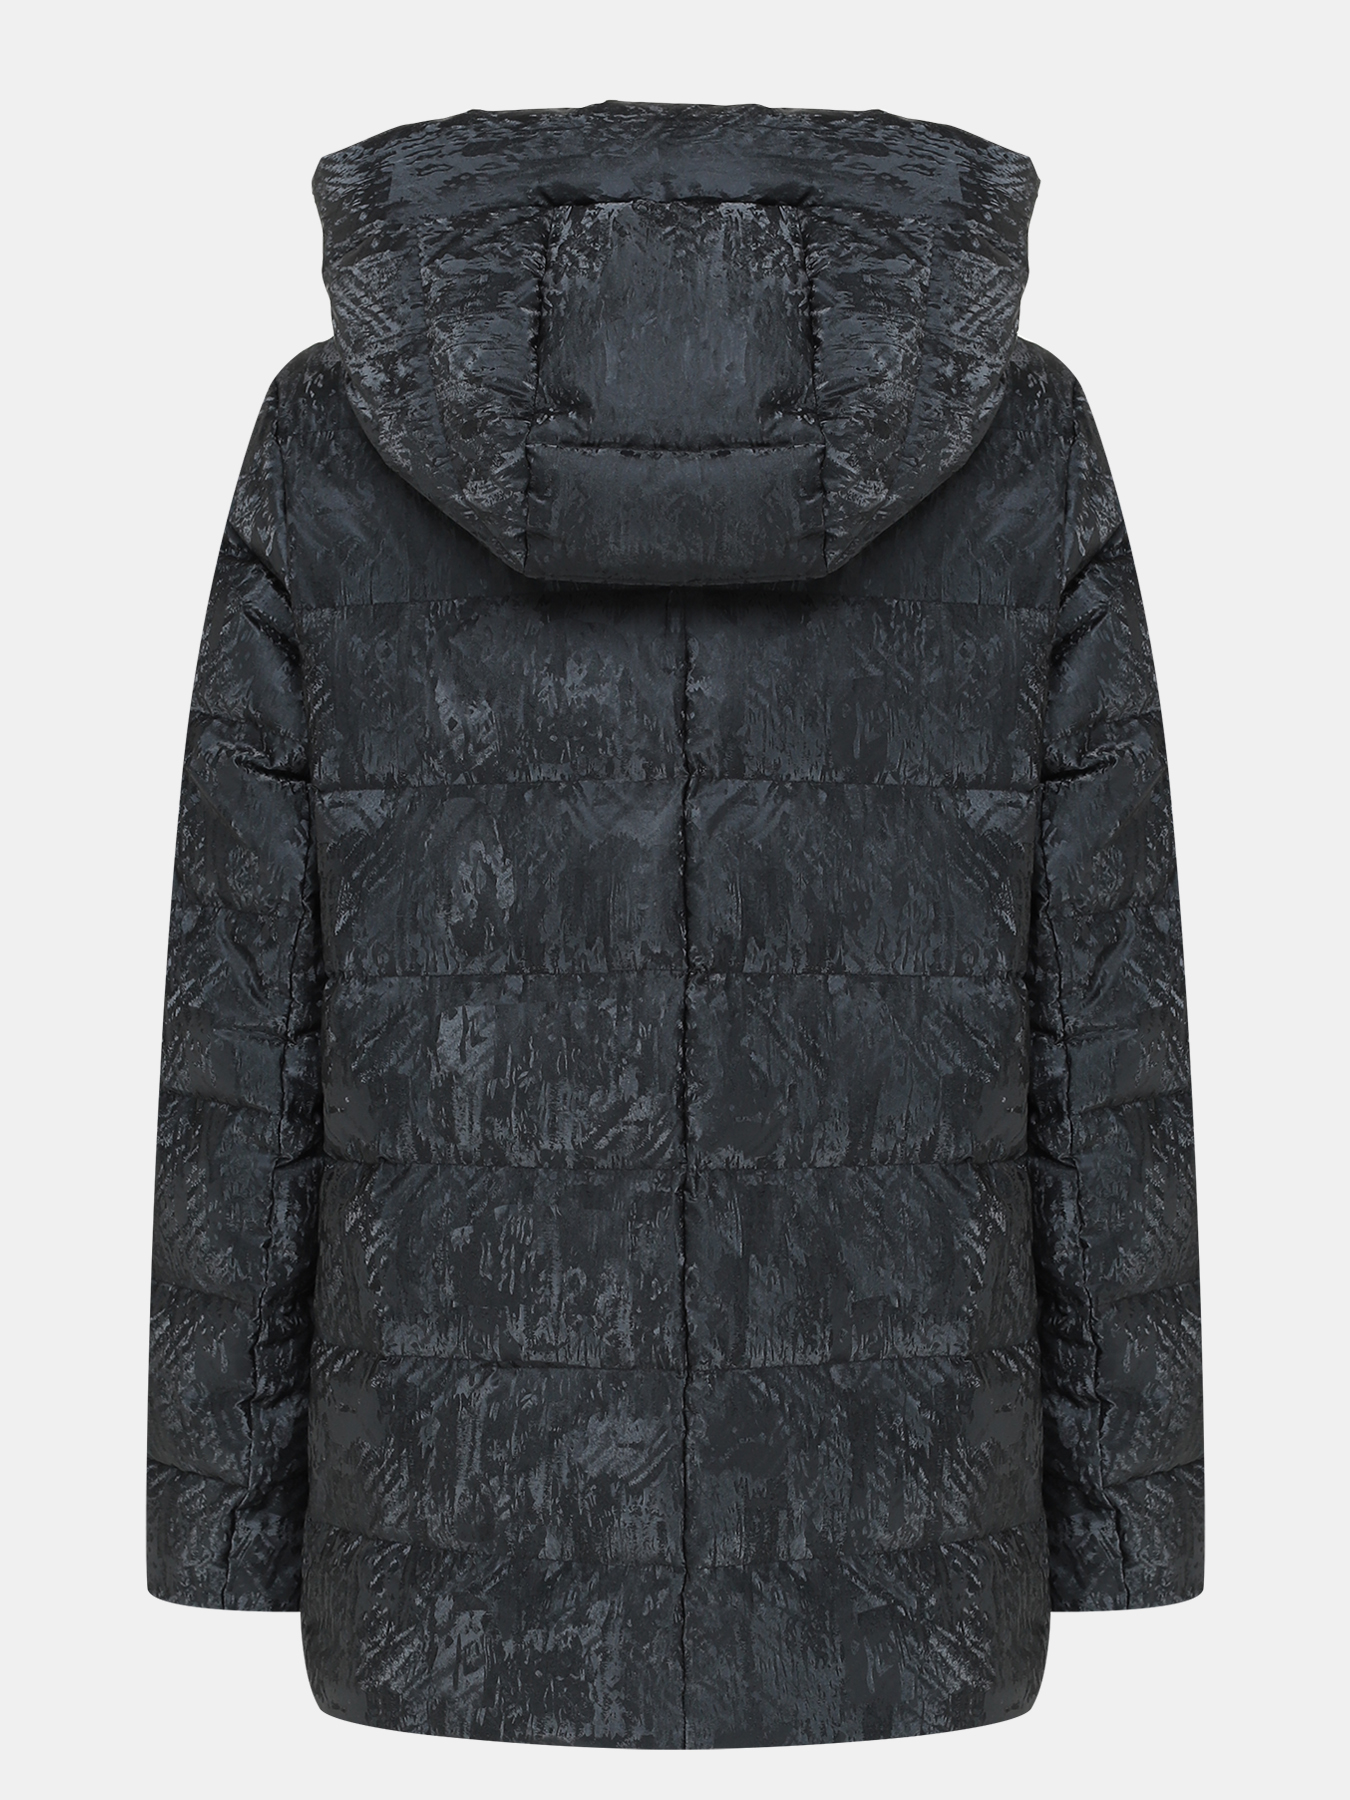 Куртка ORSA Couture 383919-025, цвет мультиколор, размер 50 - фото 2